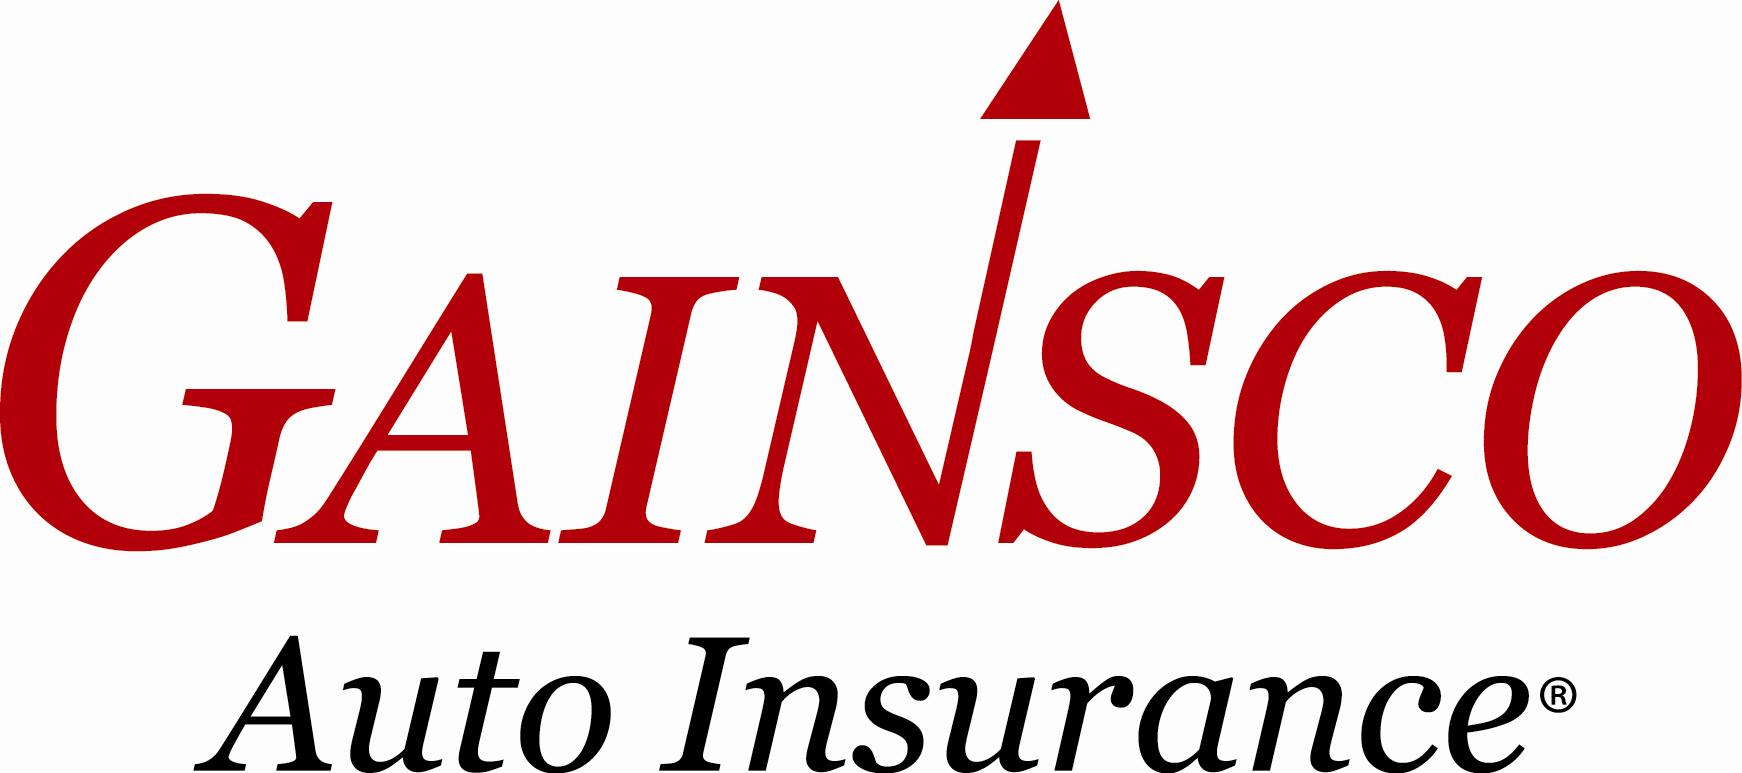 Gainsco Logo - Gainsco Auto Insurance Company Insurance Quotes